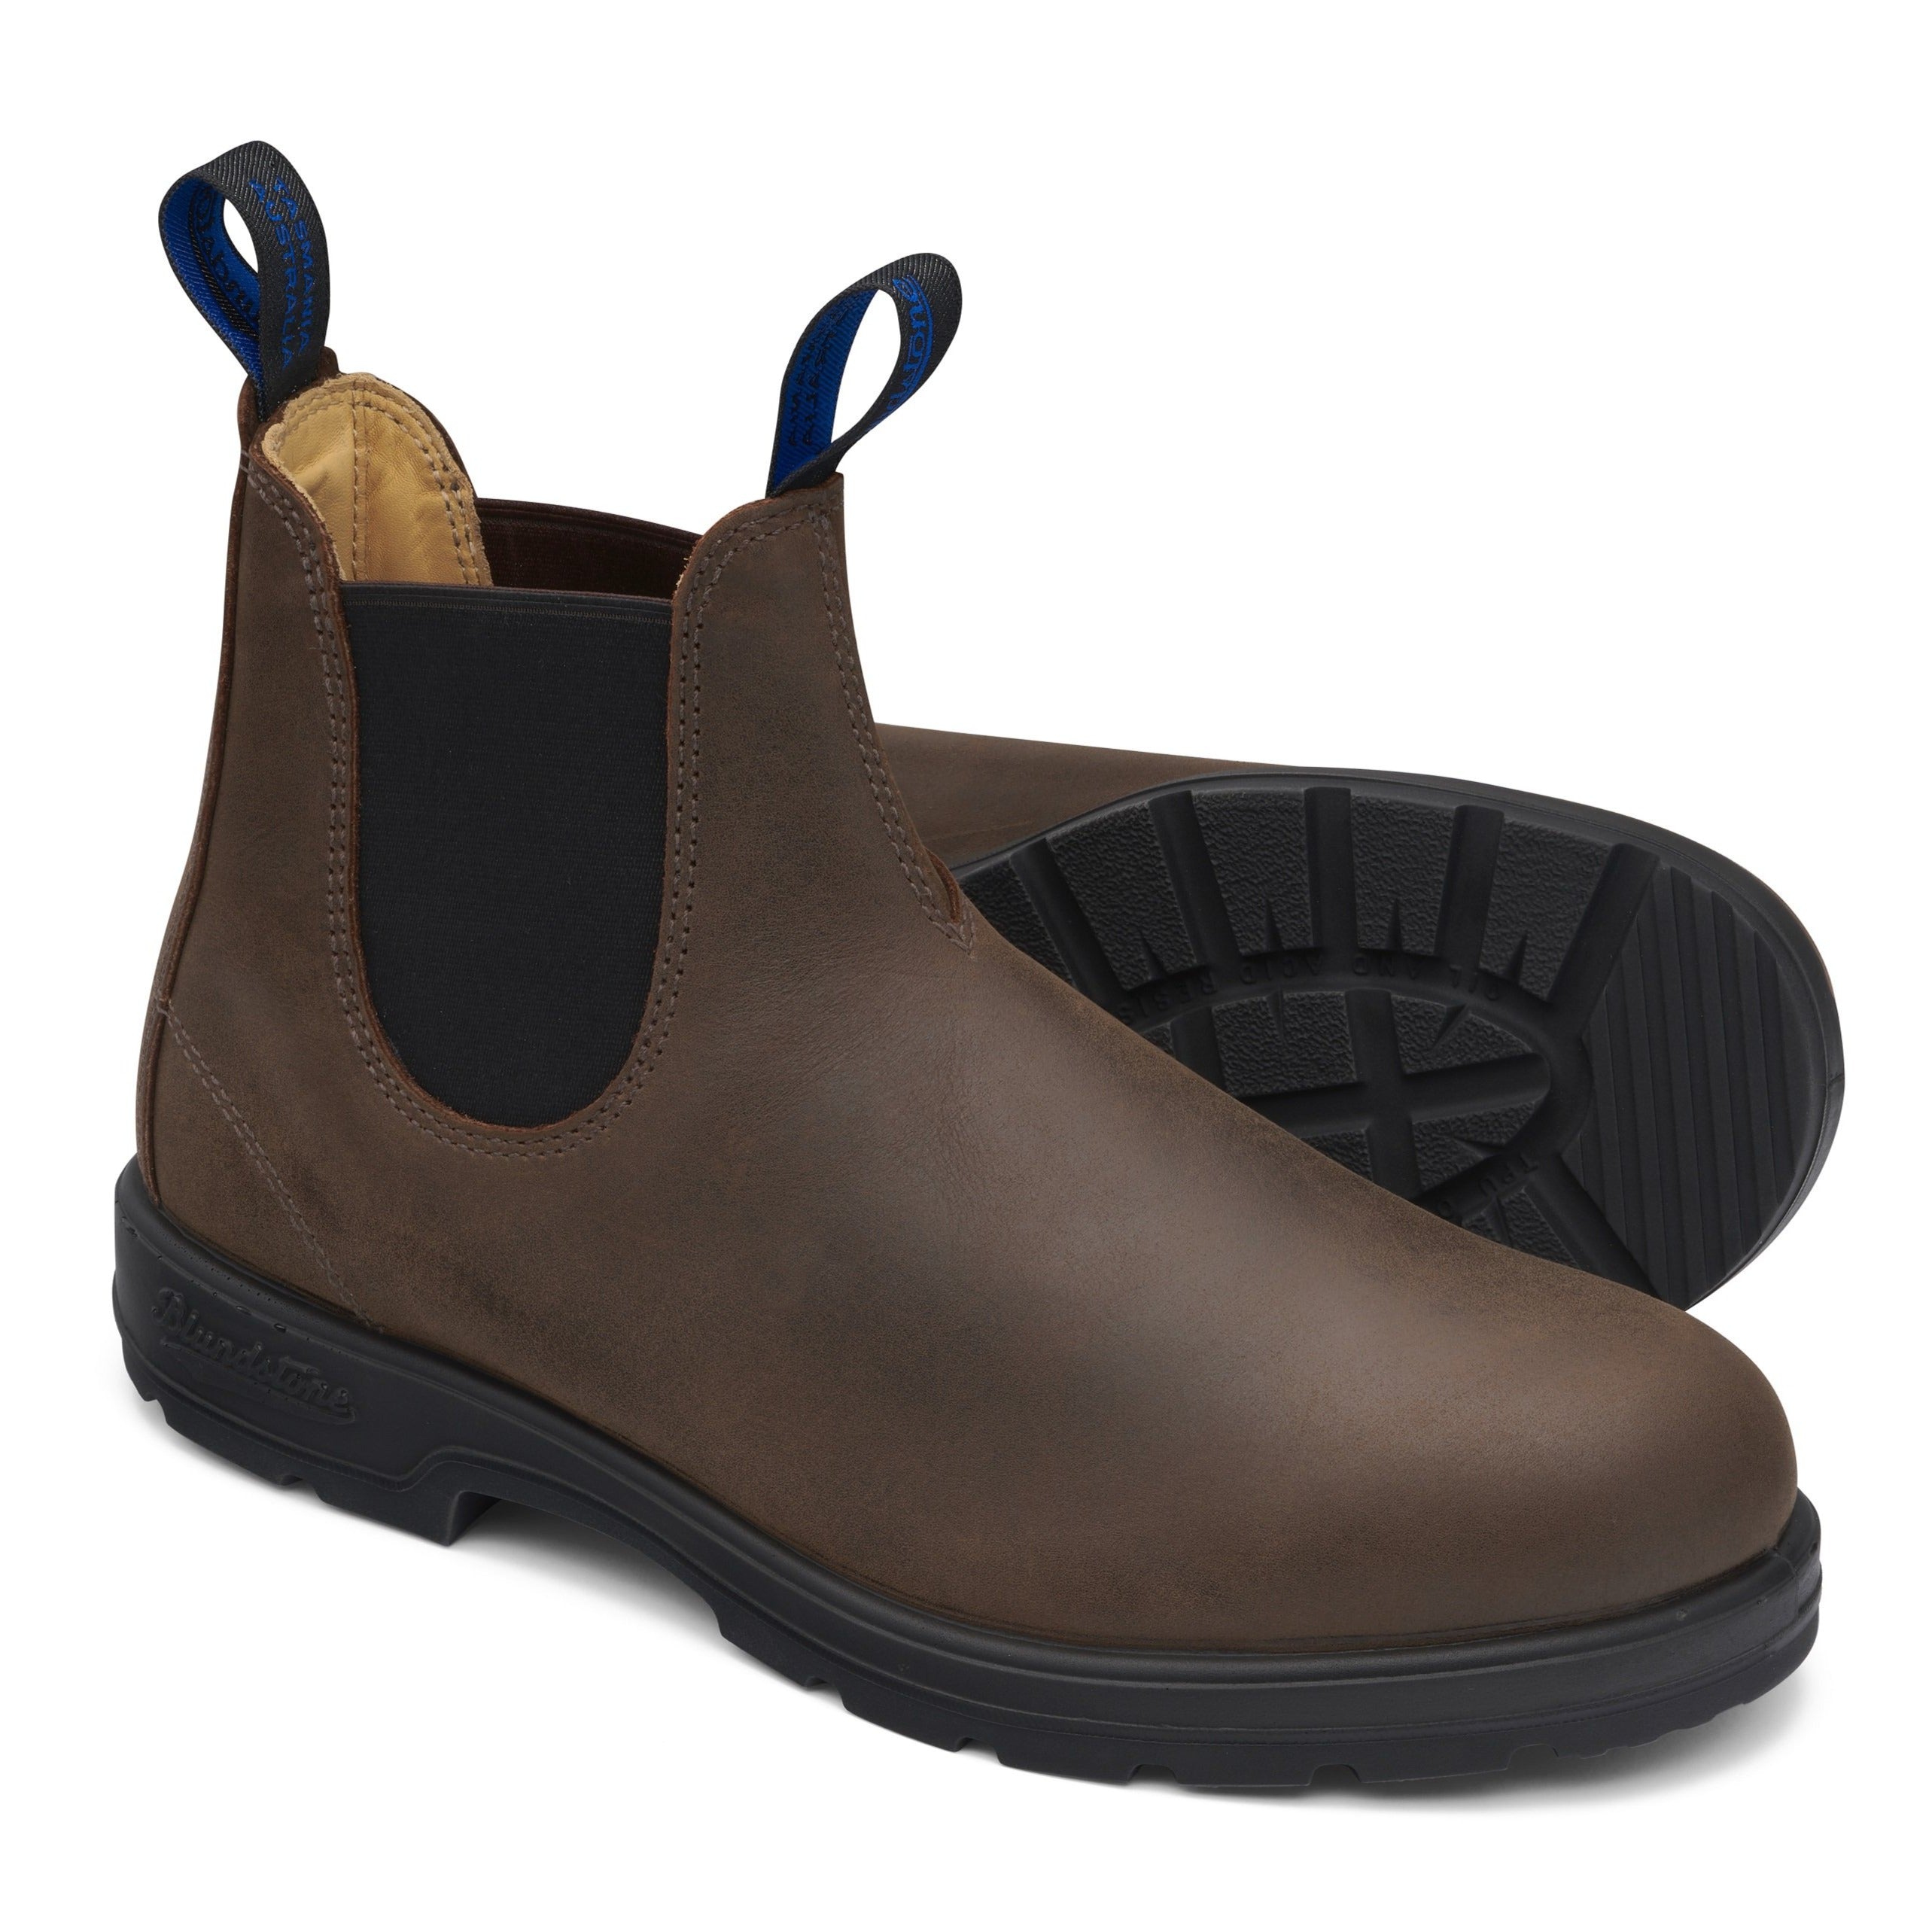 blundstone winter boot 1477 antique brown pair bottom sole